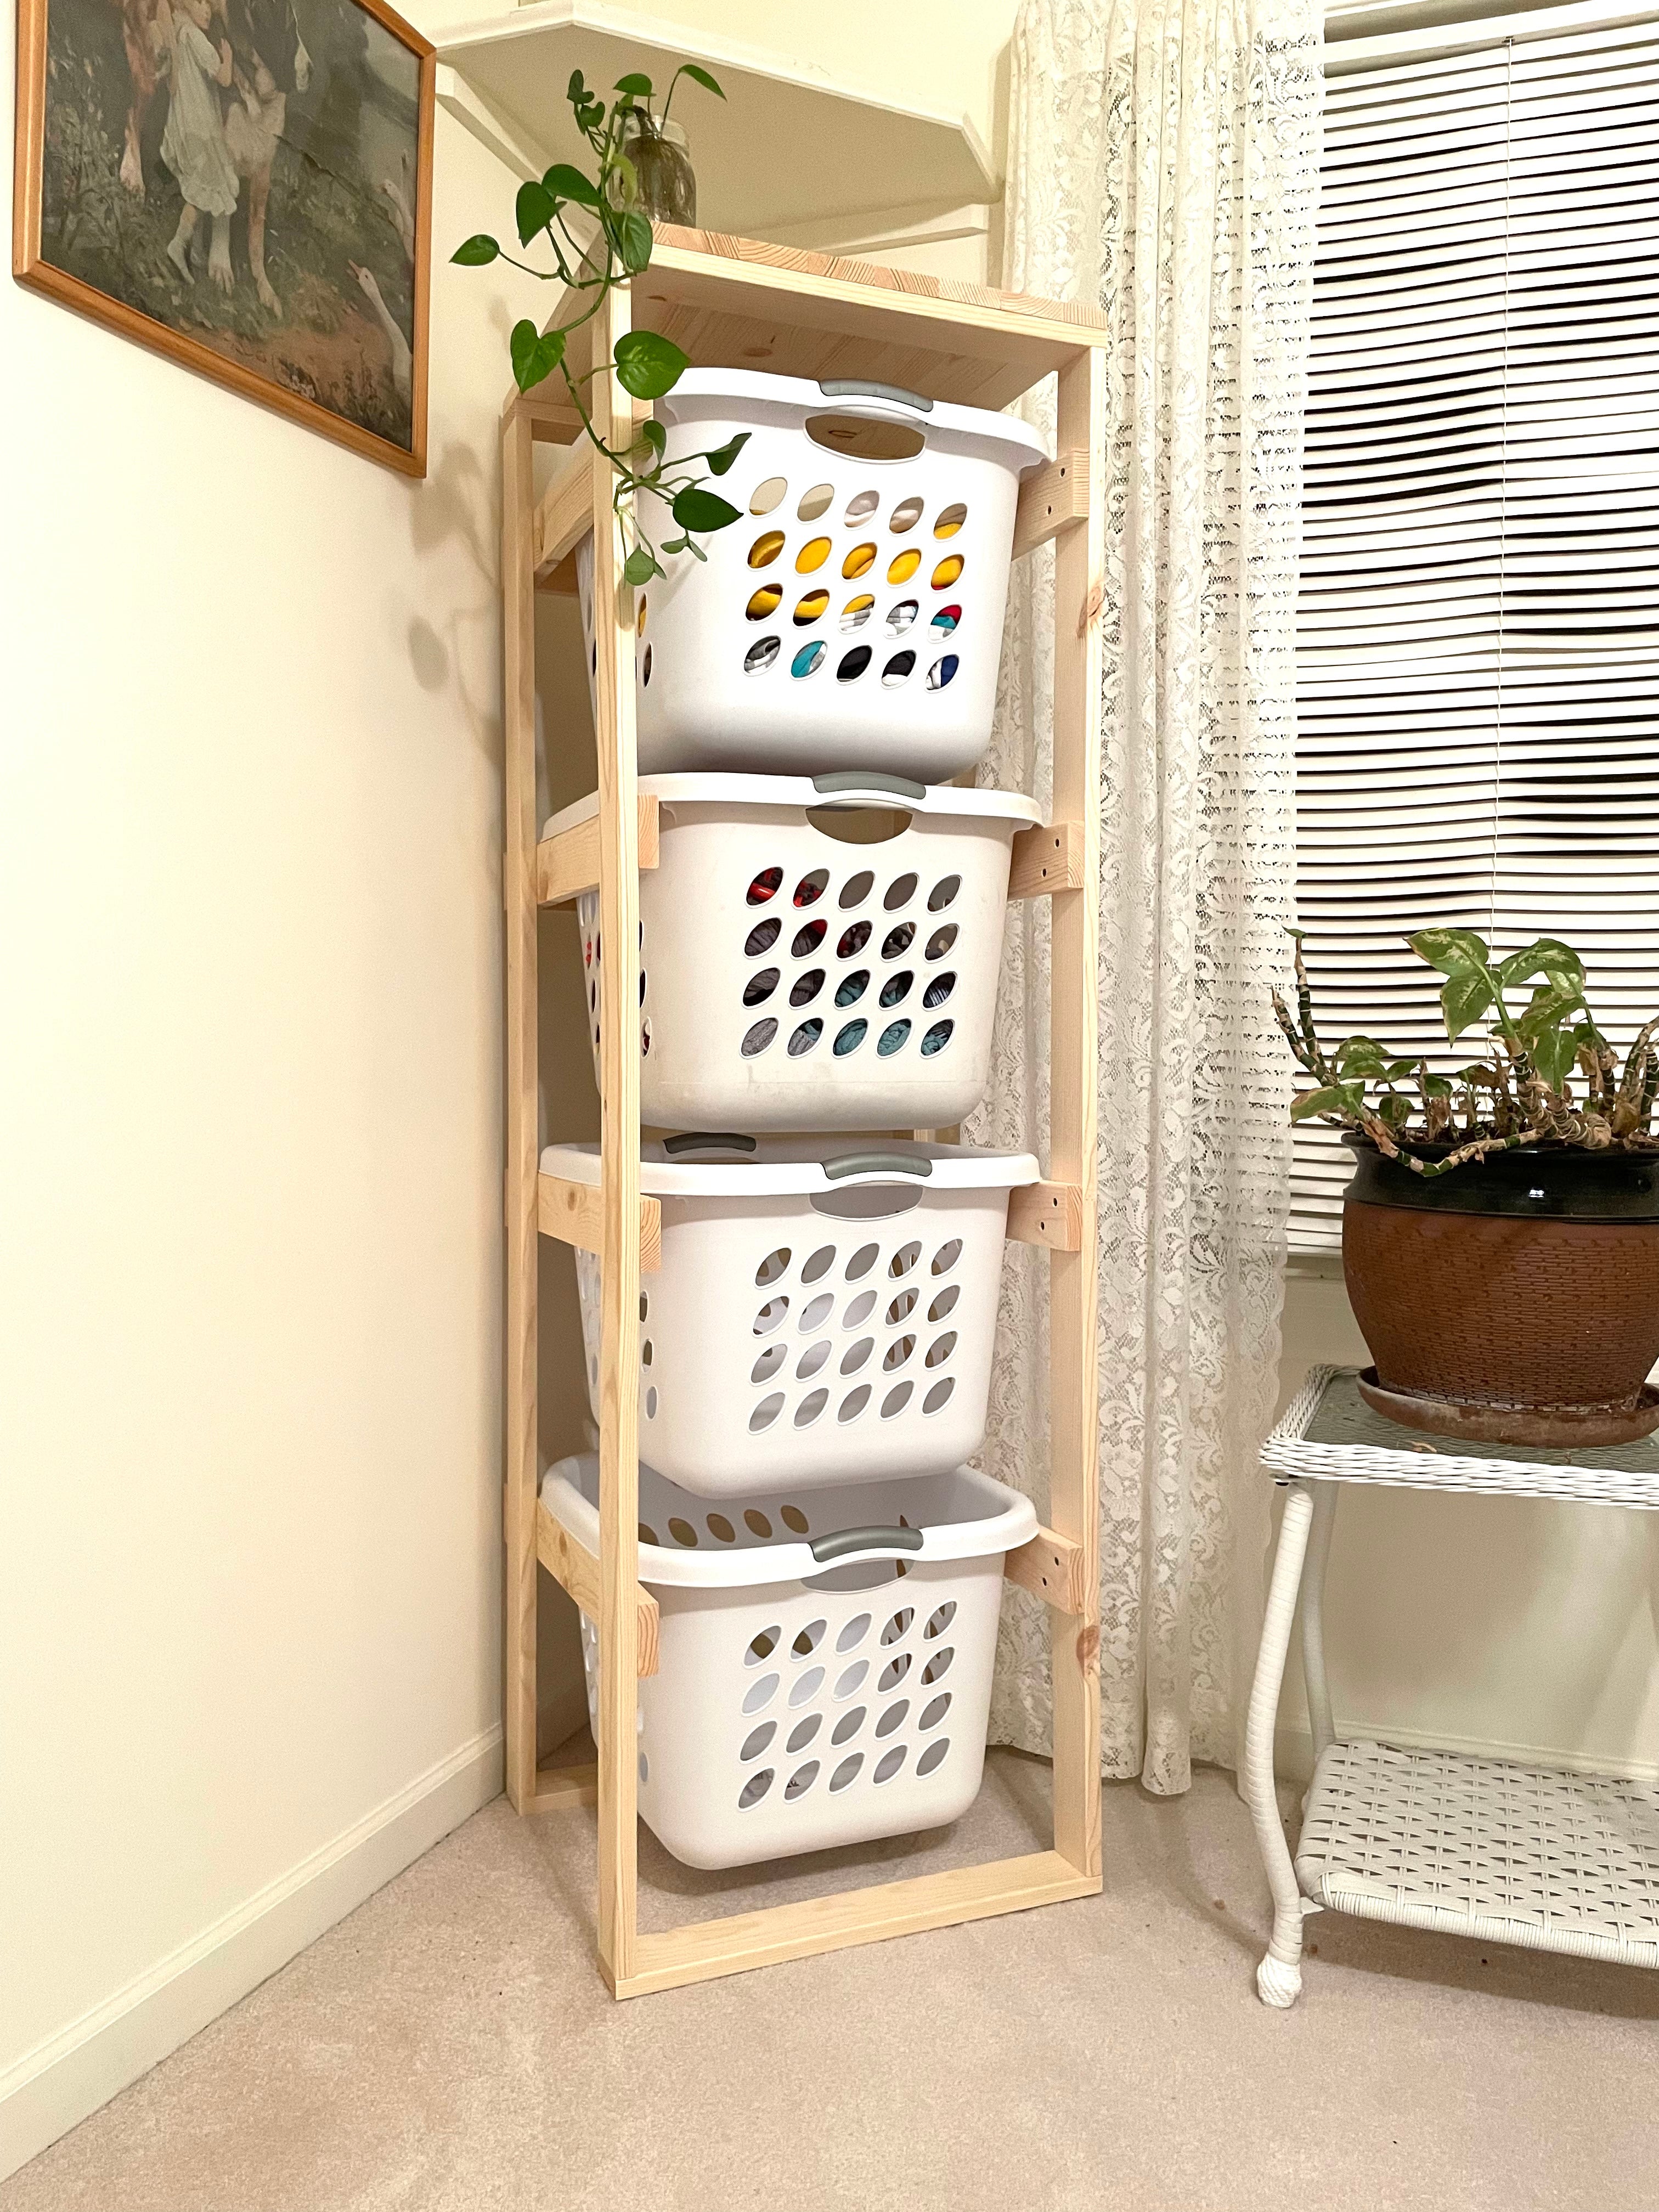 DIY Laundry Basket Organizer (Built In)